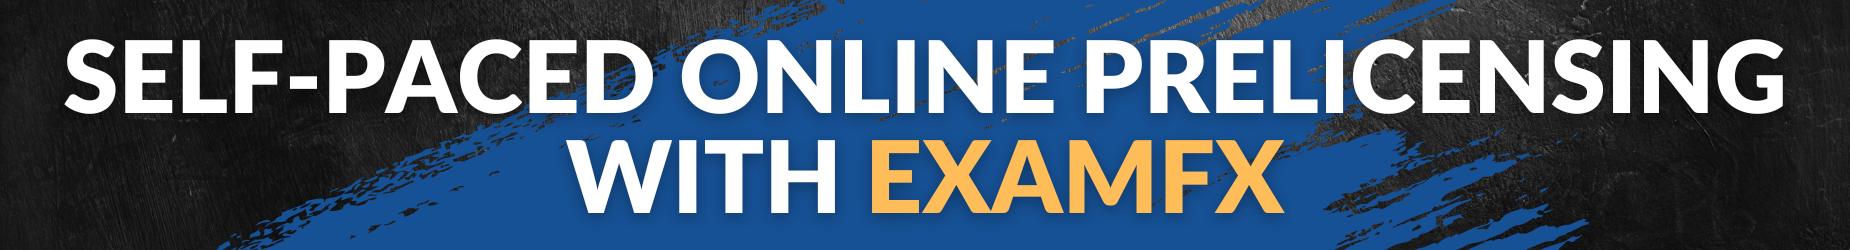 ExamFX - Website Header.png